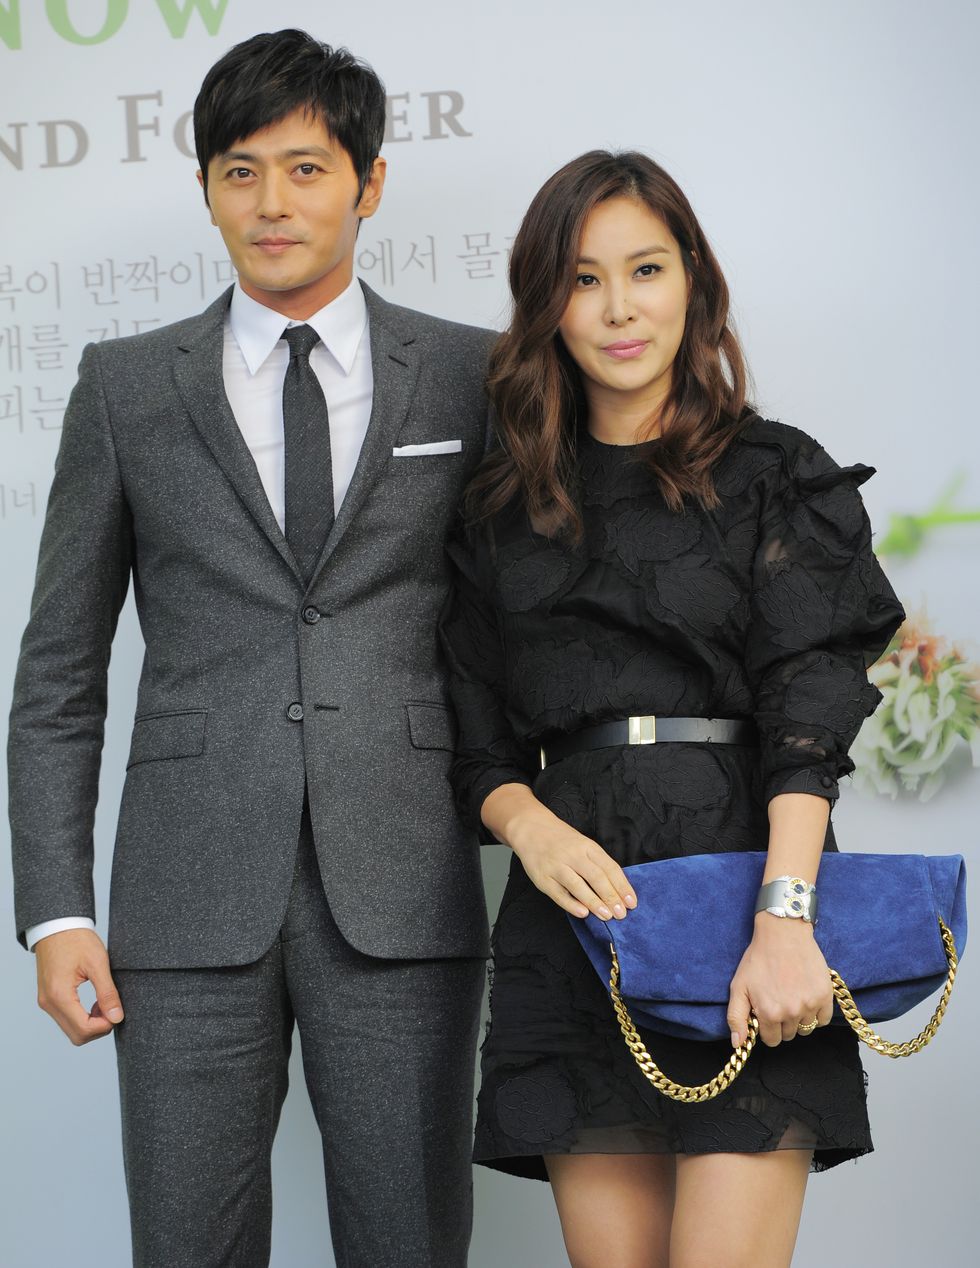 Lee Byung-Hun and Lee Min-Jung Wedding